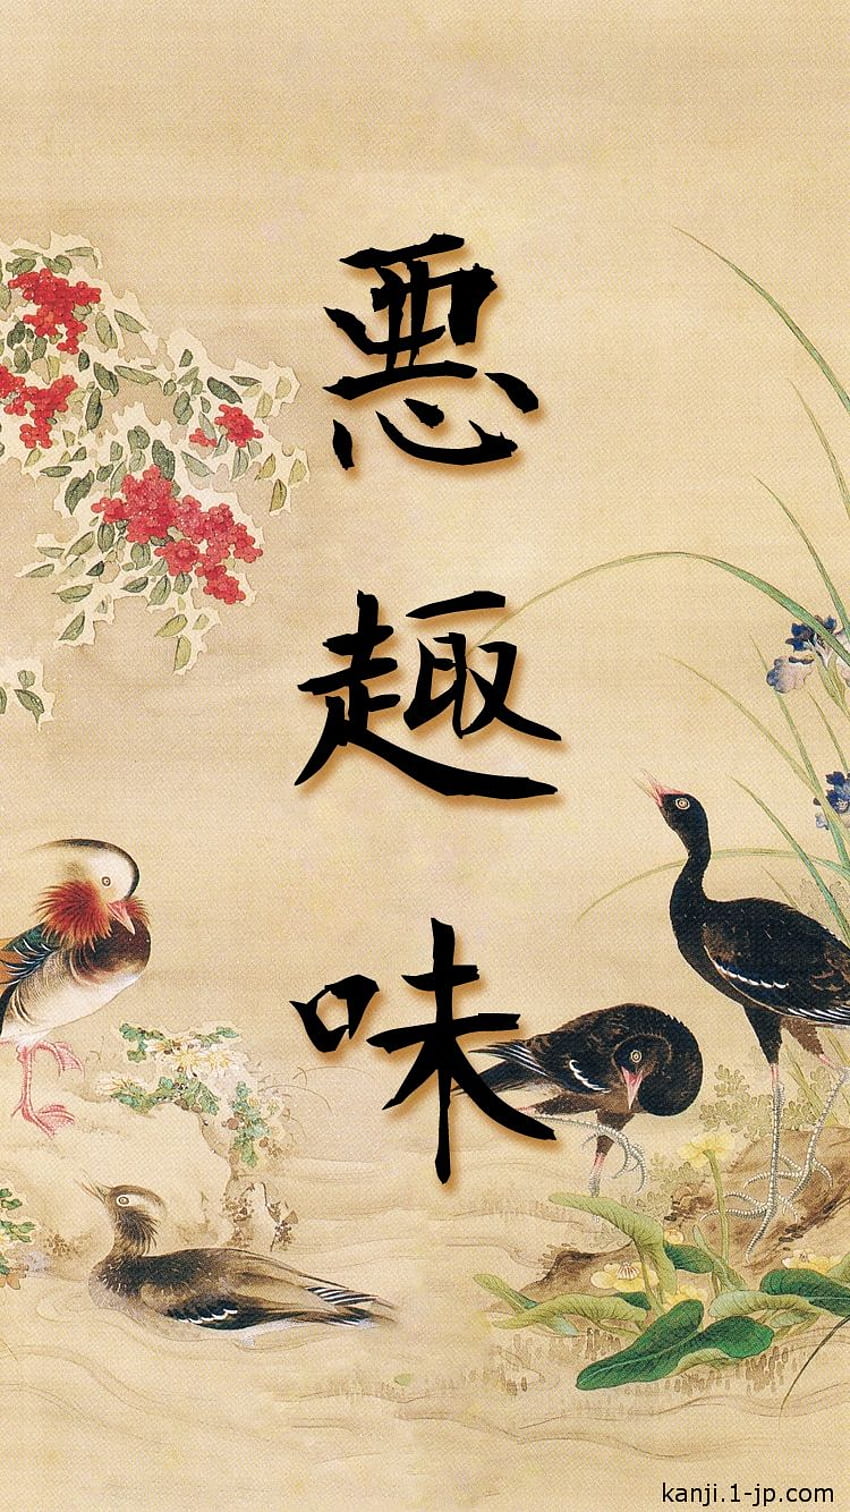 Cool Japanese Kanji and Art Part 2 iPhone 6 HD phone wallpaper